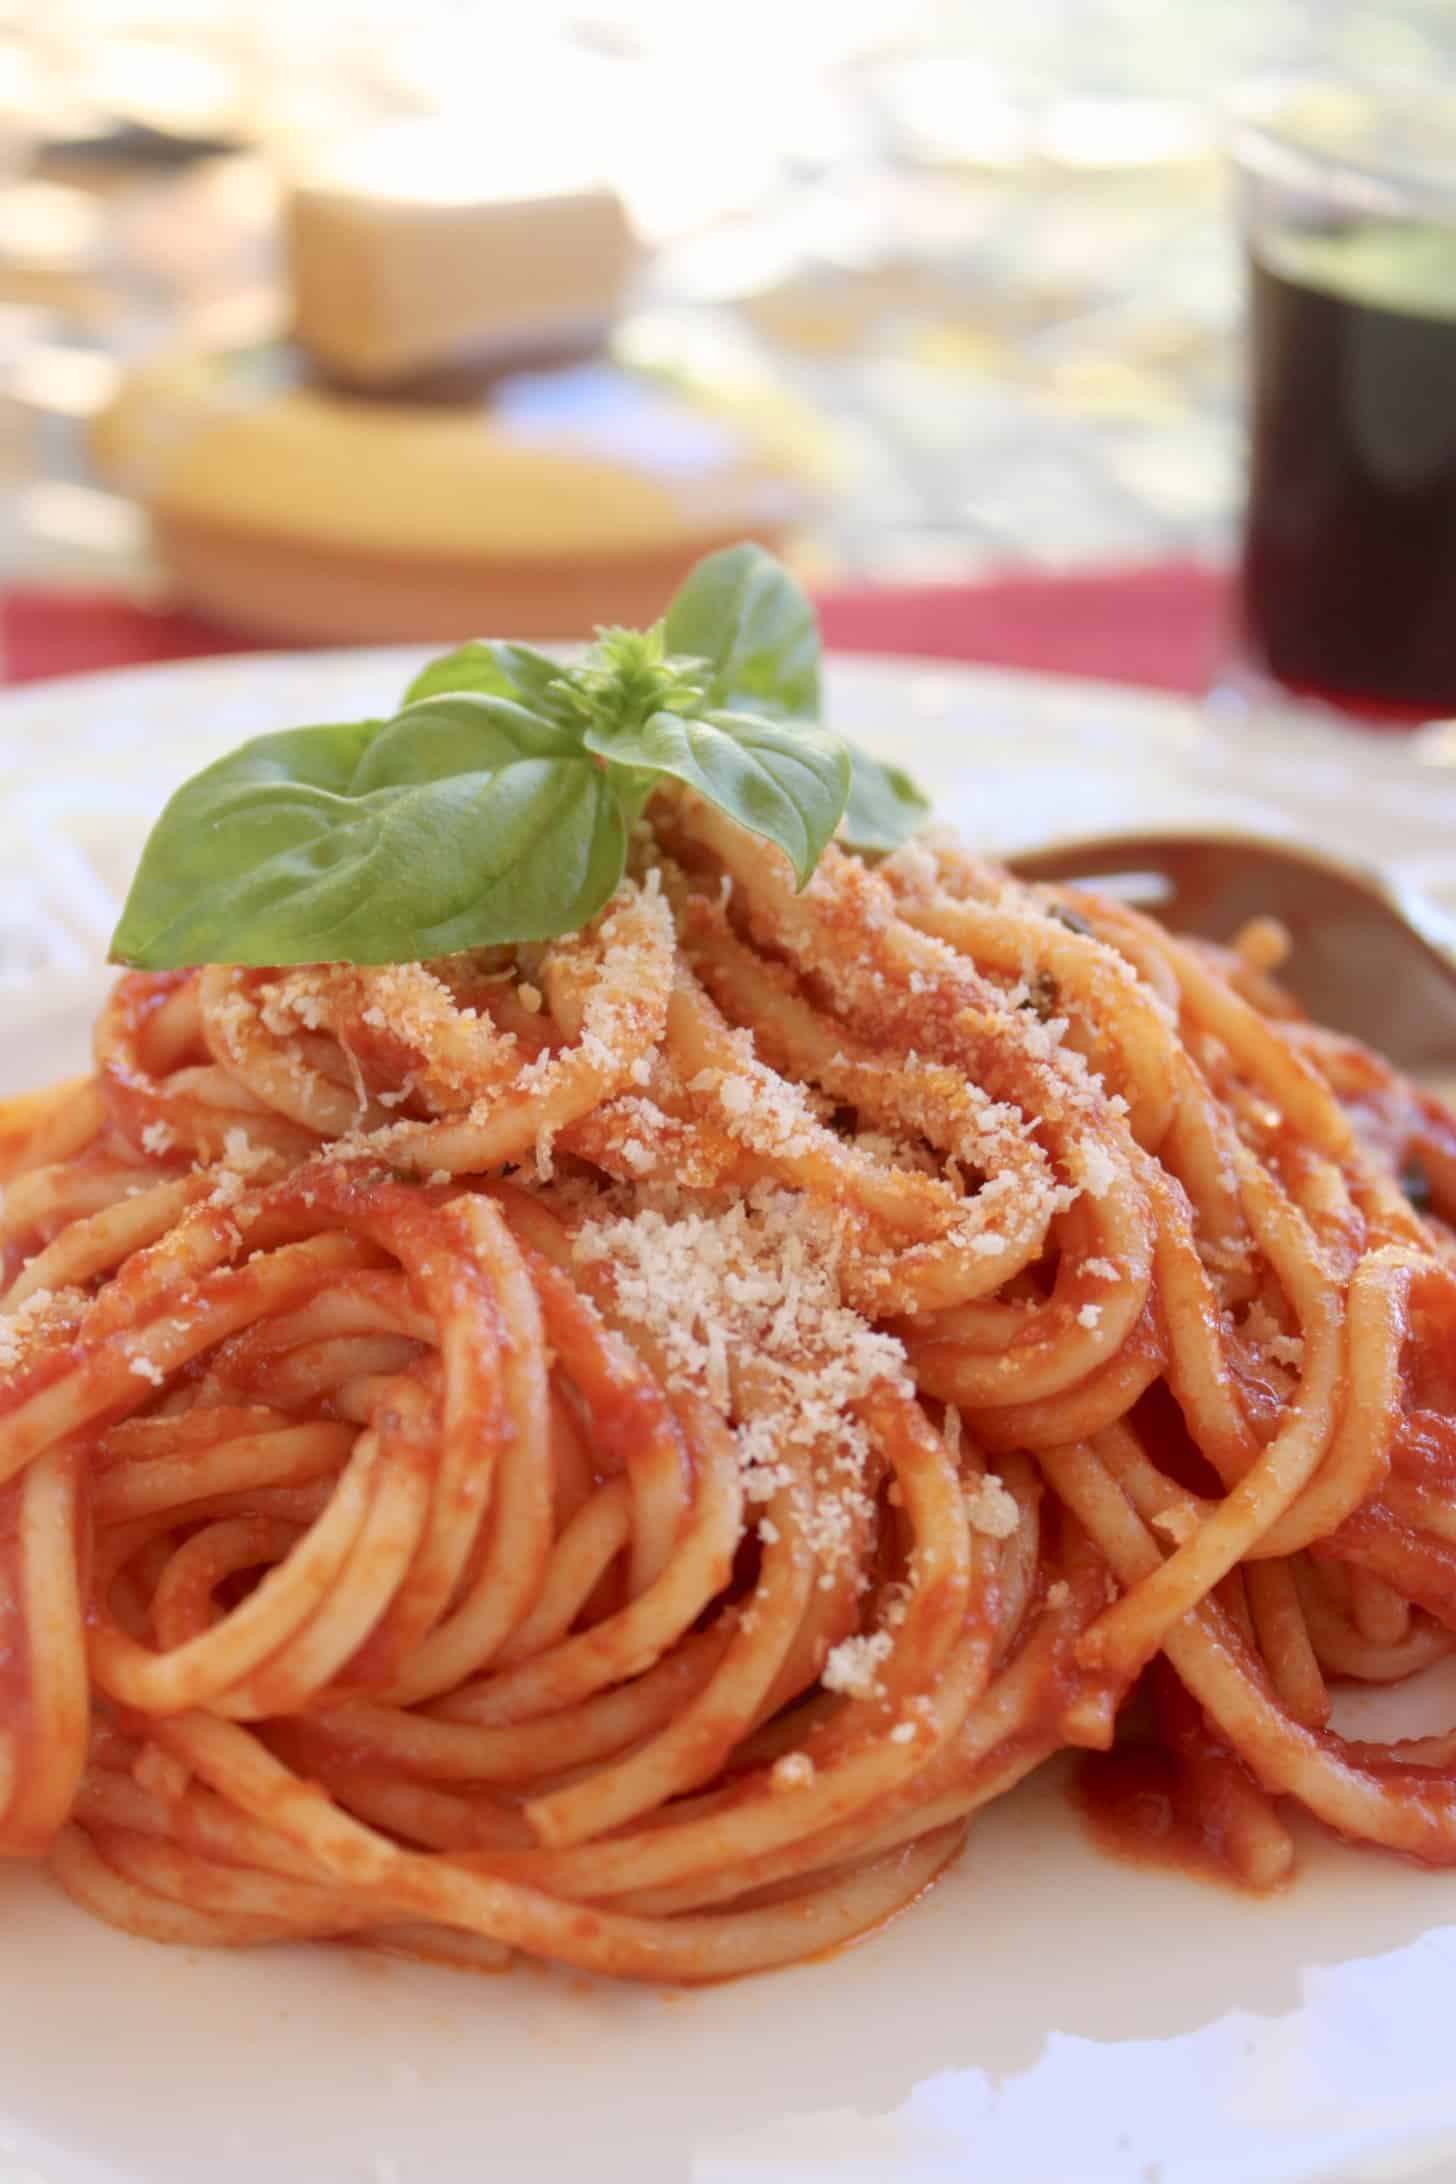 blanc laiteux Il faut se méfier global italian spaghetti tomato sauce ...